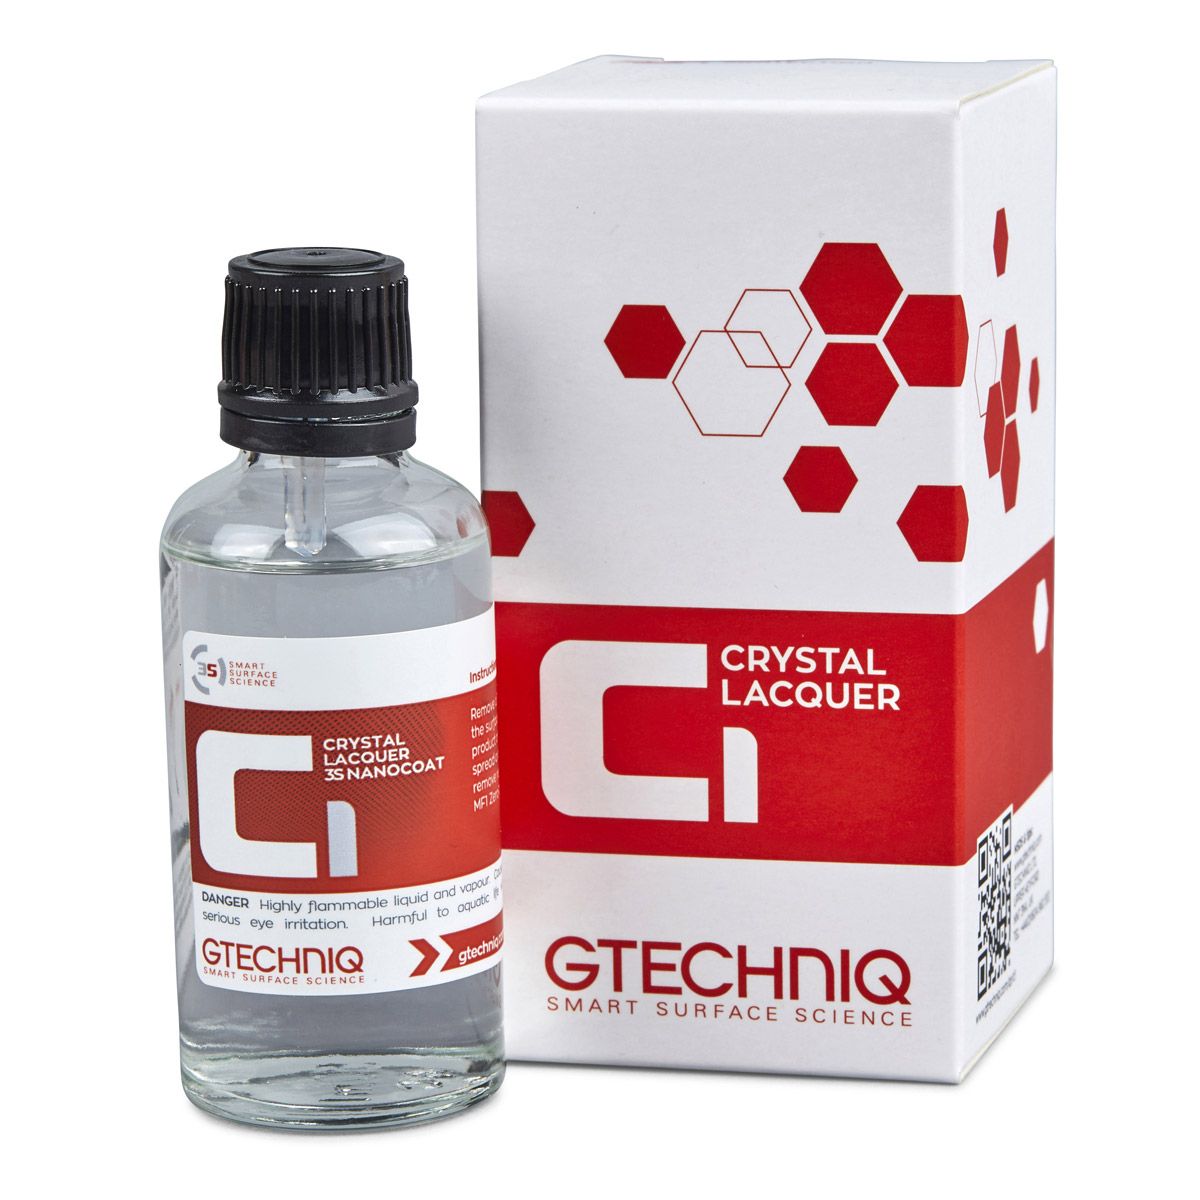 Gtechniq Products